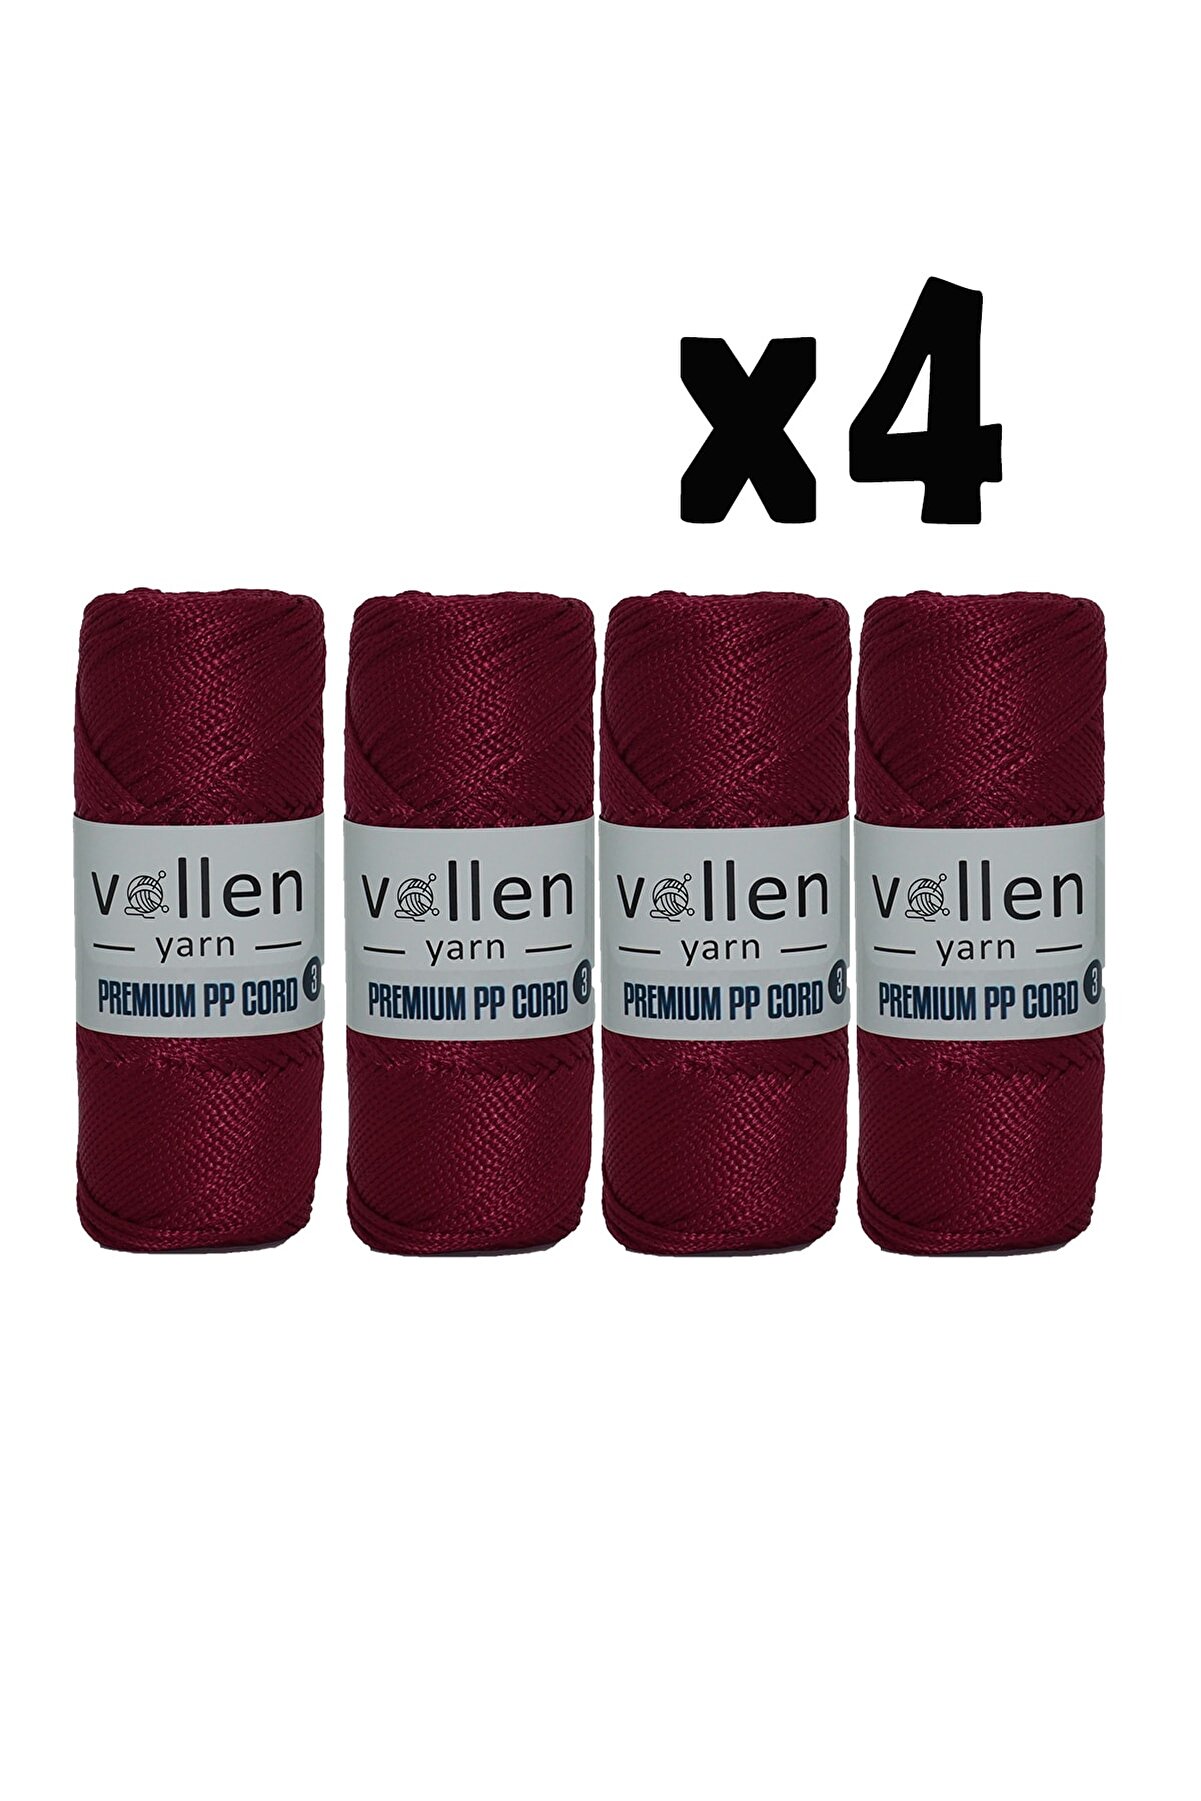 vollen yarn Polyester Makrome Ipi Supla Ipi Çanta Ipi Bileklik Ipi 3 mm 4 Adet